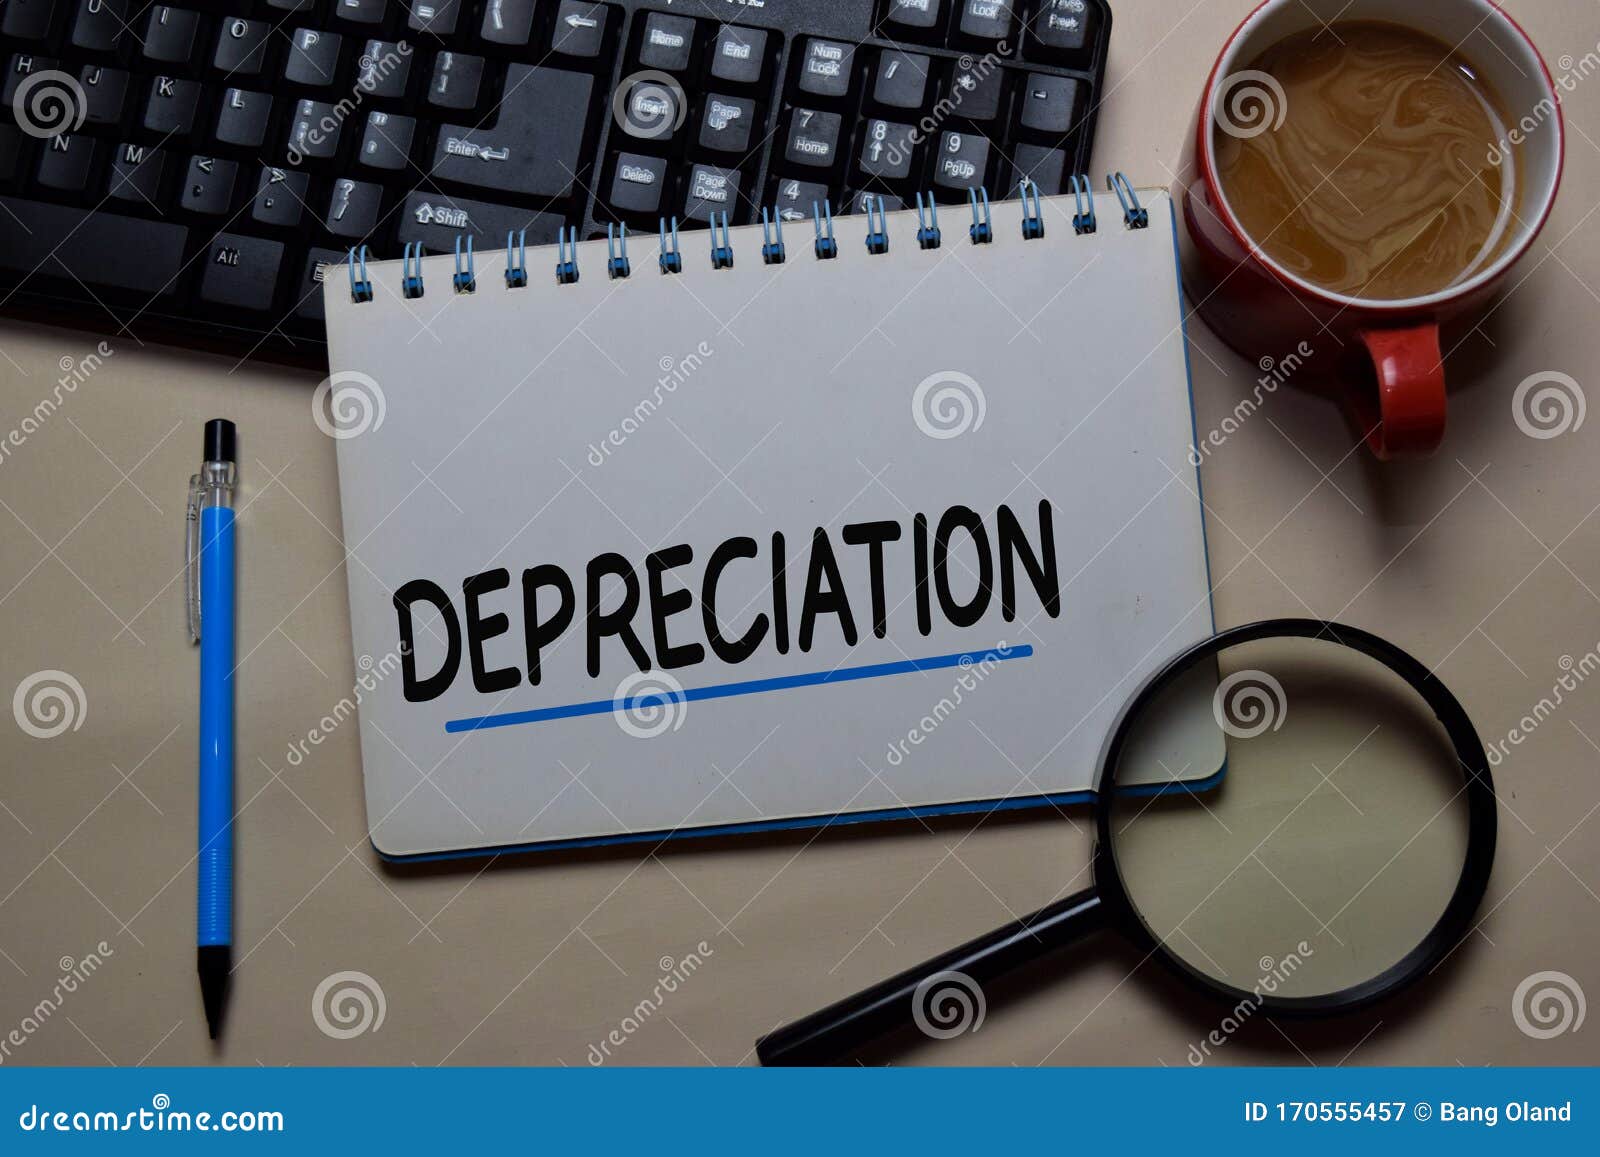 depreciation write on a book  on office desk